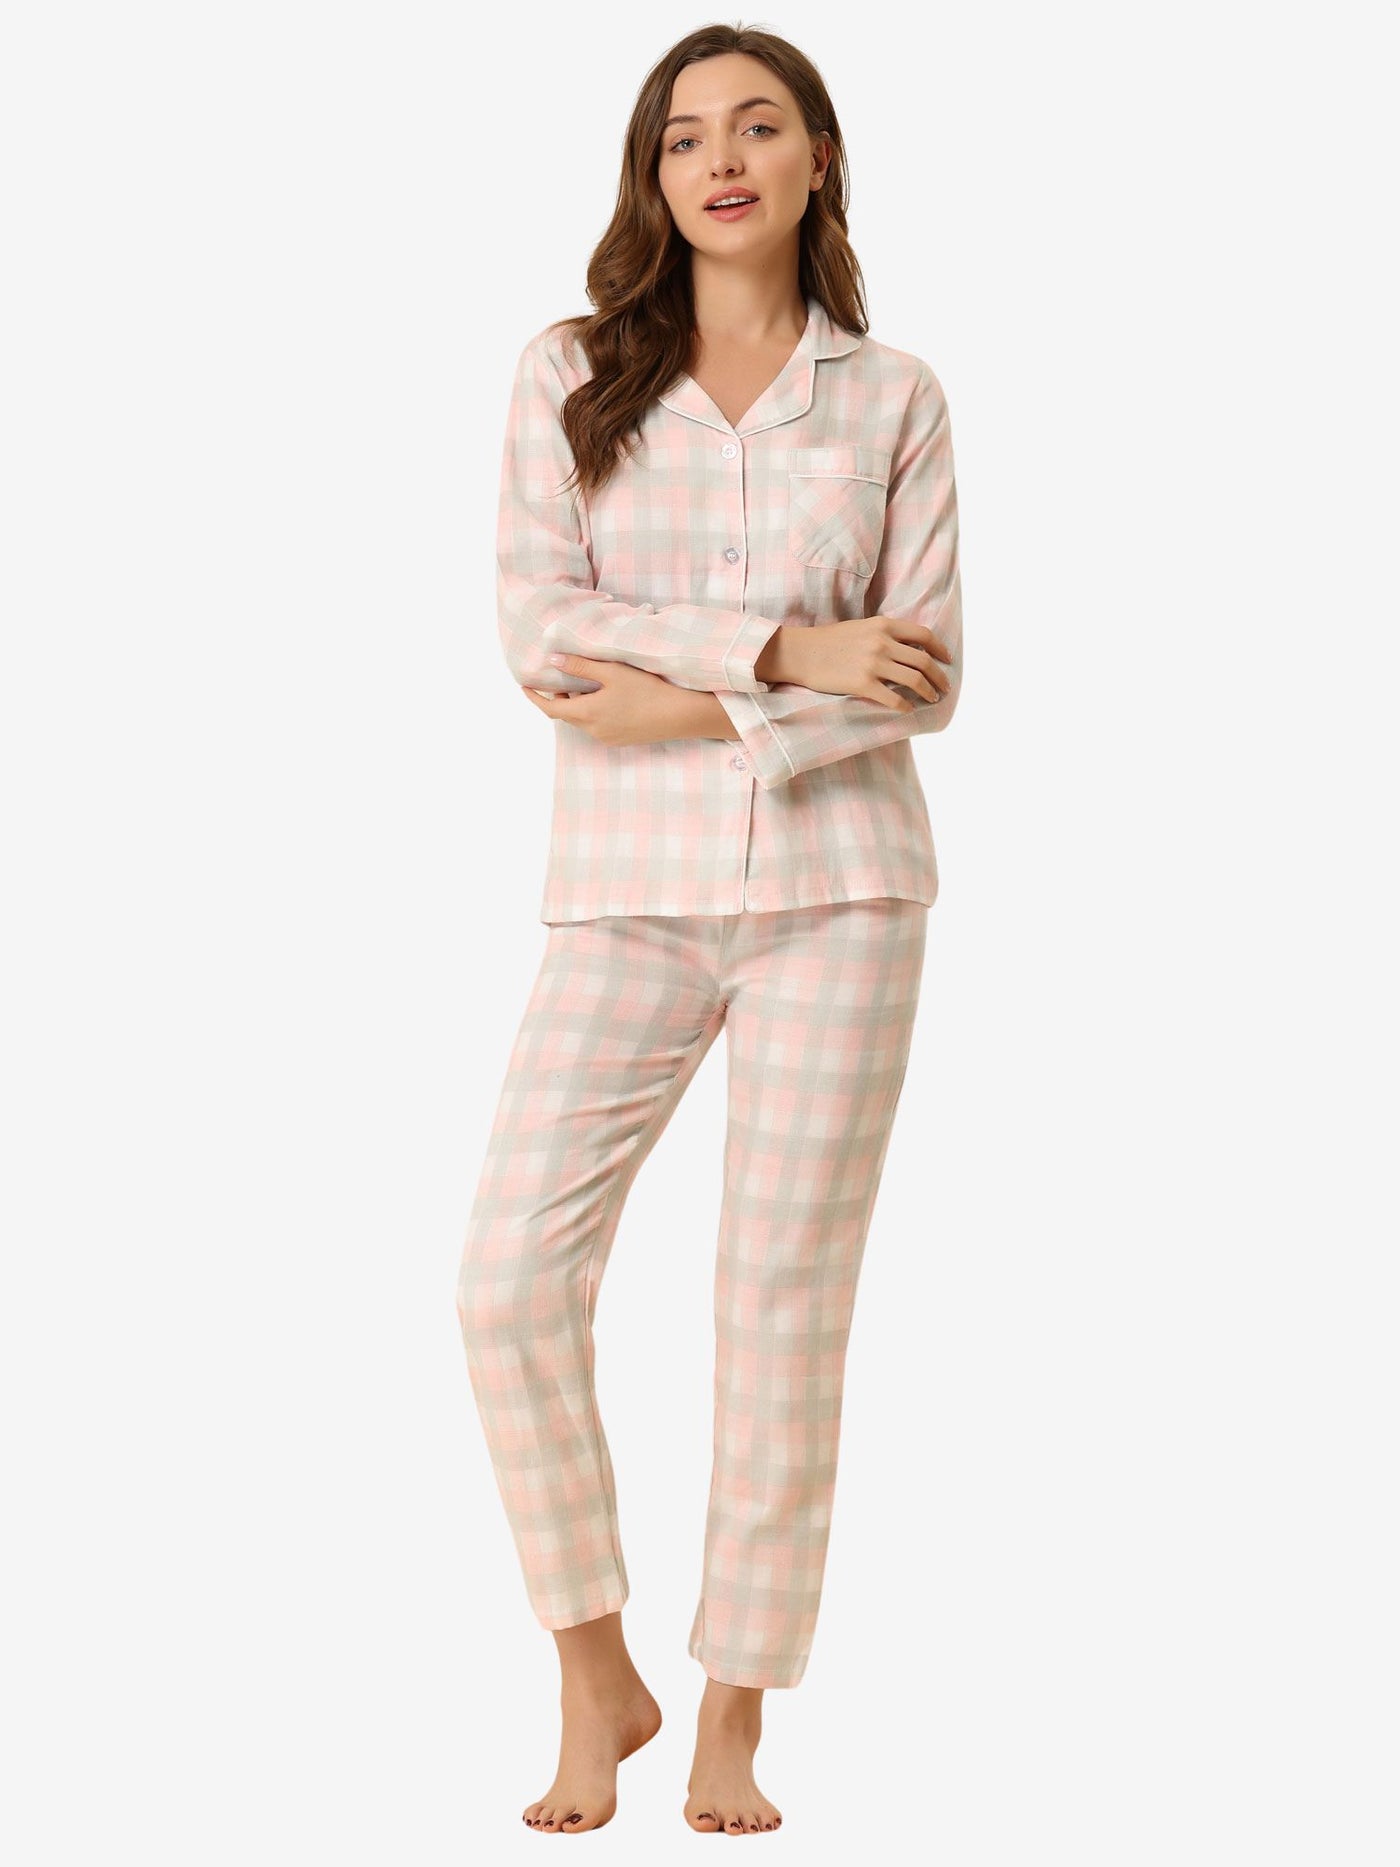 Allegra K Sleepwear Pajama Night Suit Plaid Button Down Lounge Set